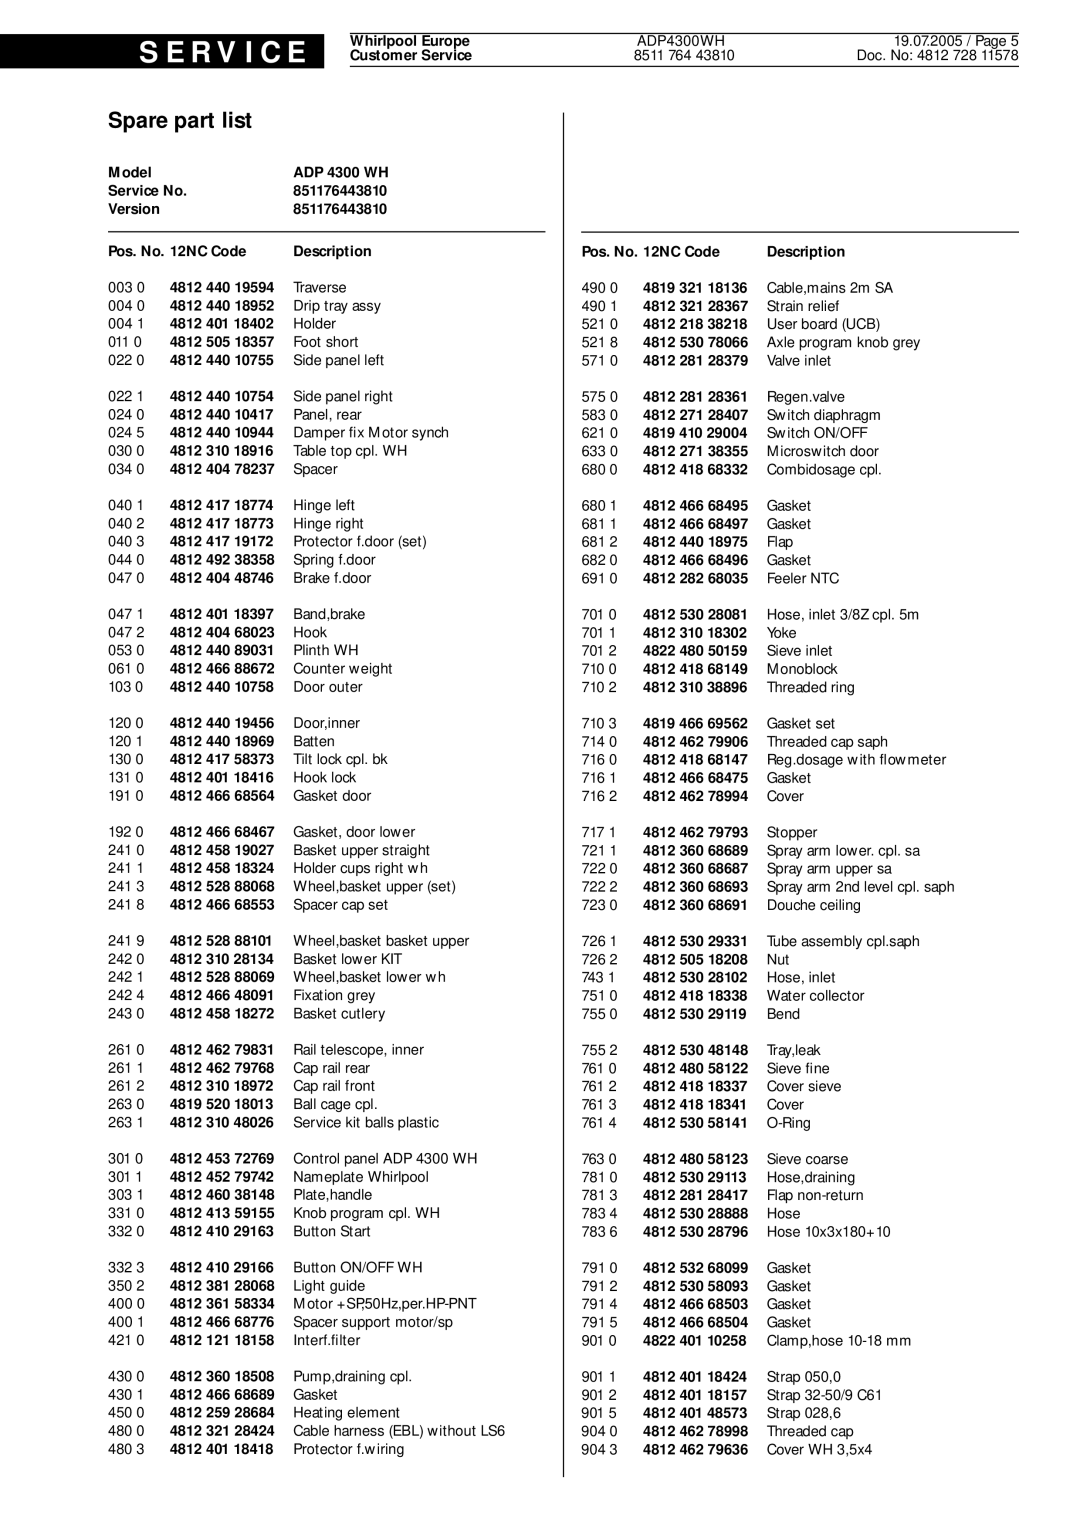 Whirlpool ADP 4300 WH service manual Spare part list, S E R V I C E 